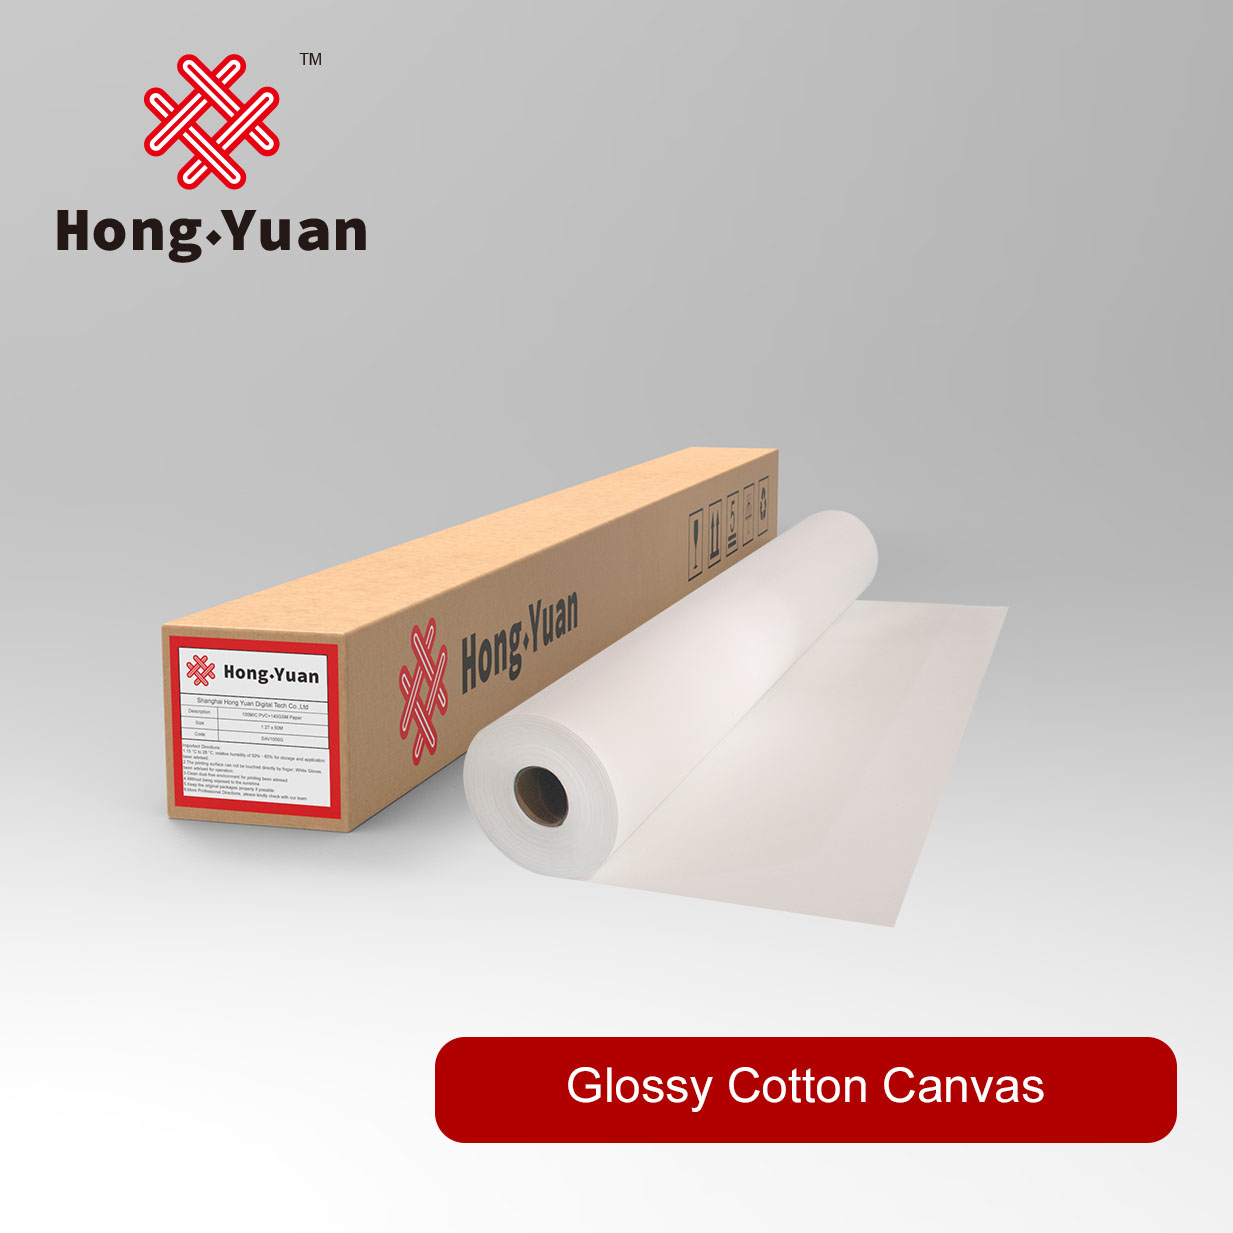 Glossy Cotton Canvas DMC400G